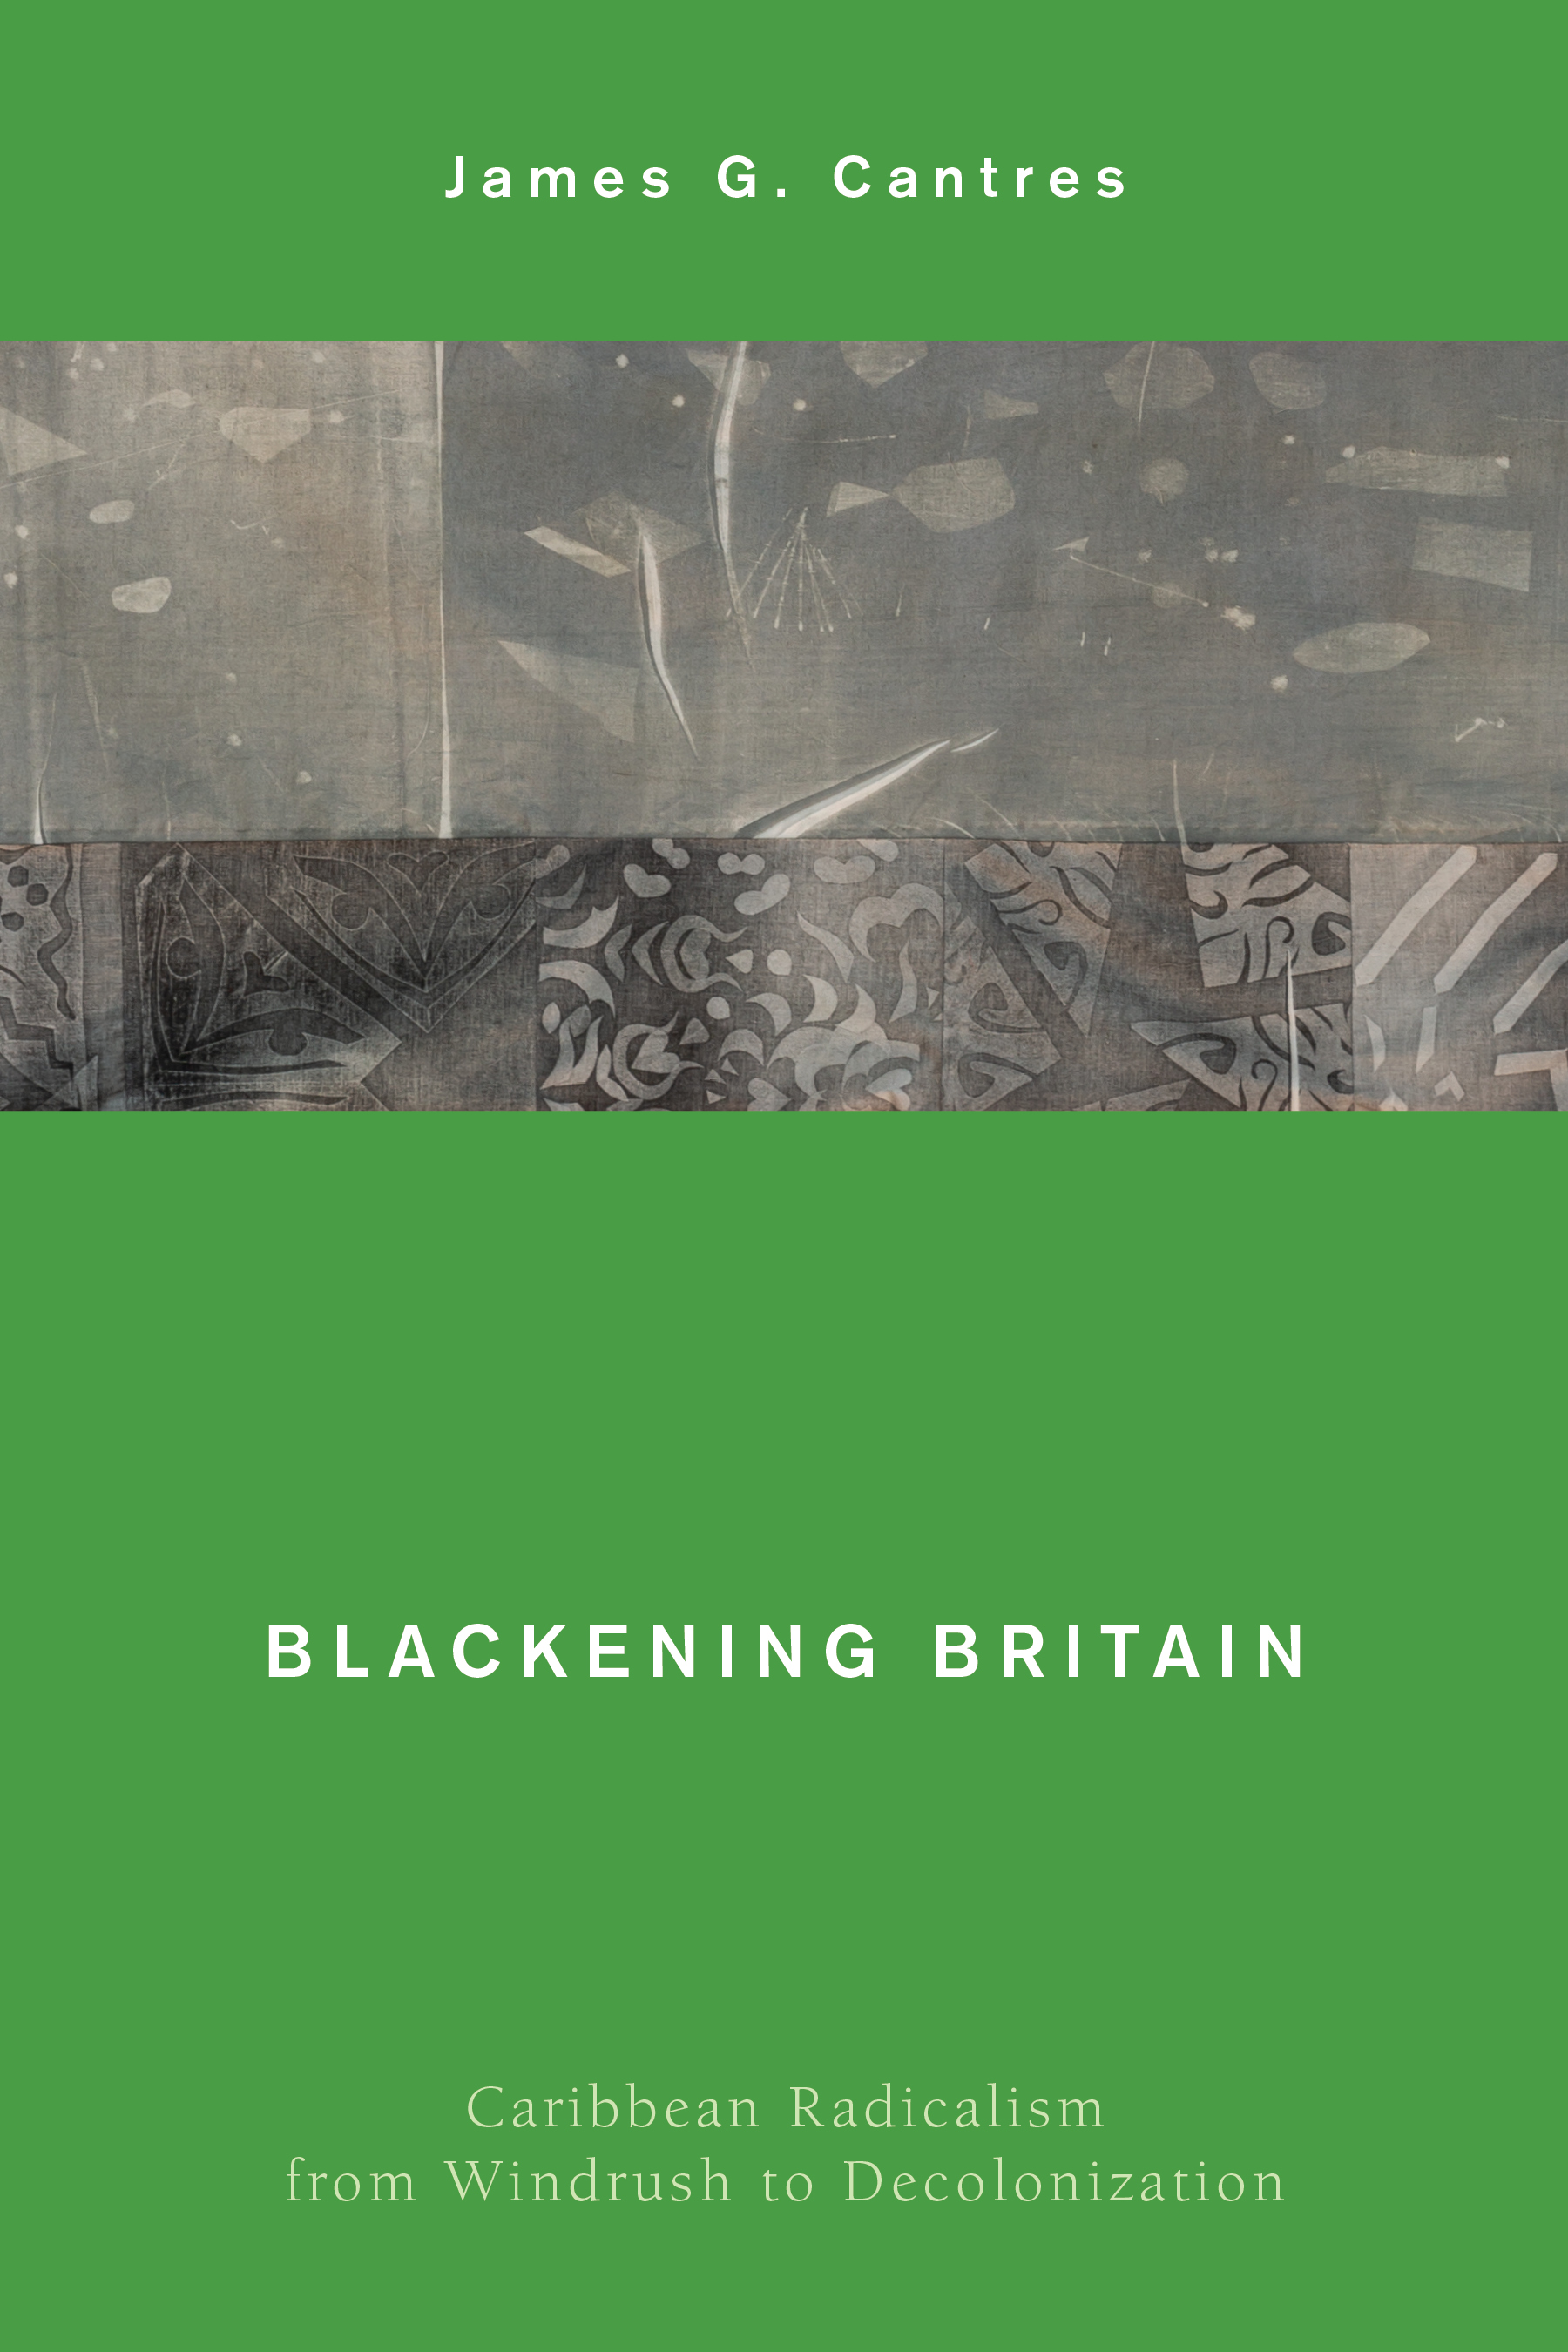 Blackening Britain: Caribbean Radicalism from Windrush to Decolonization